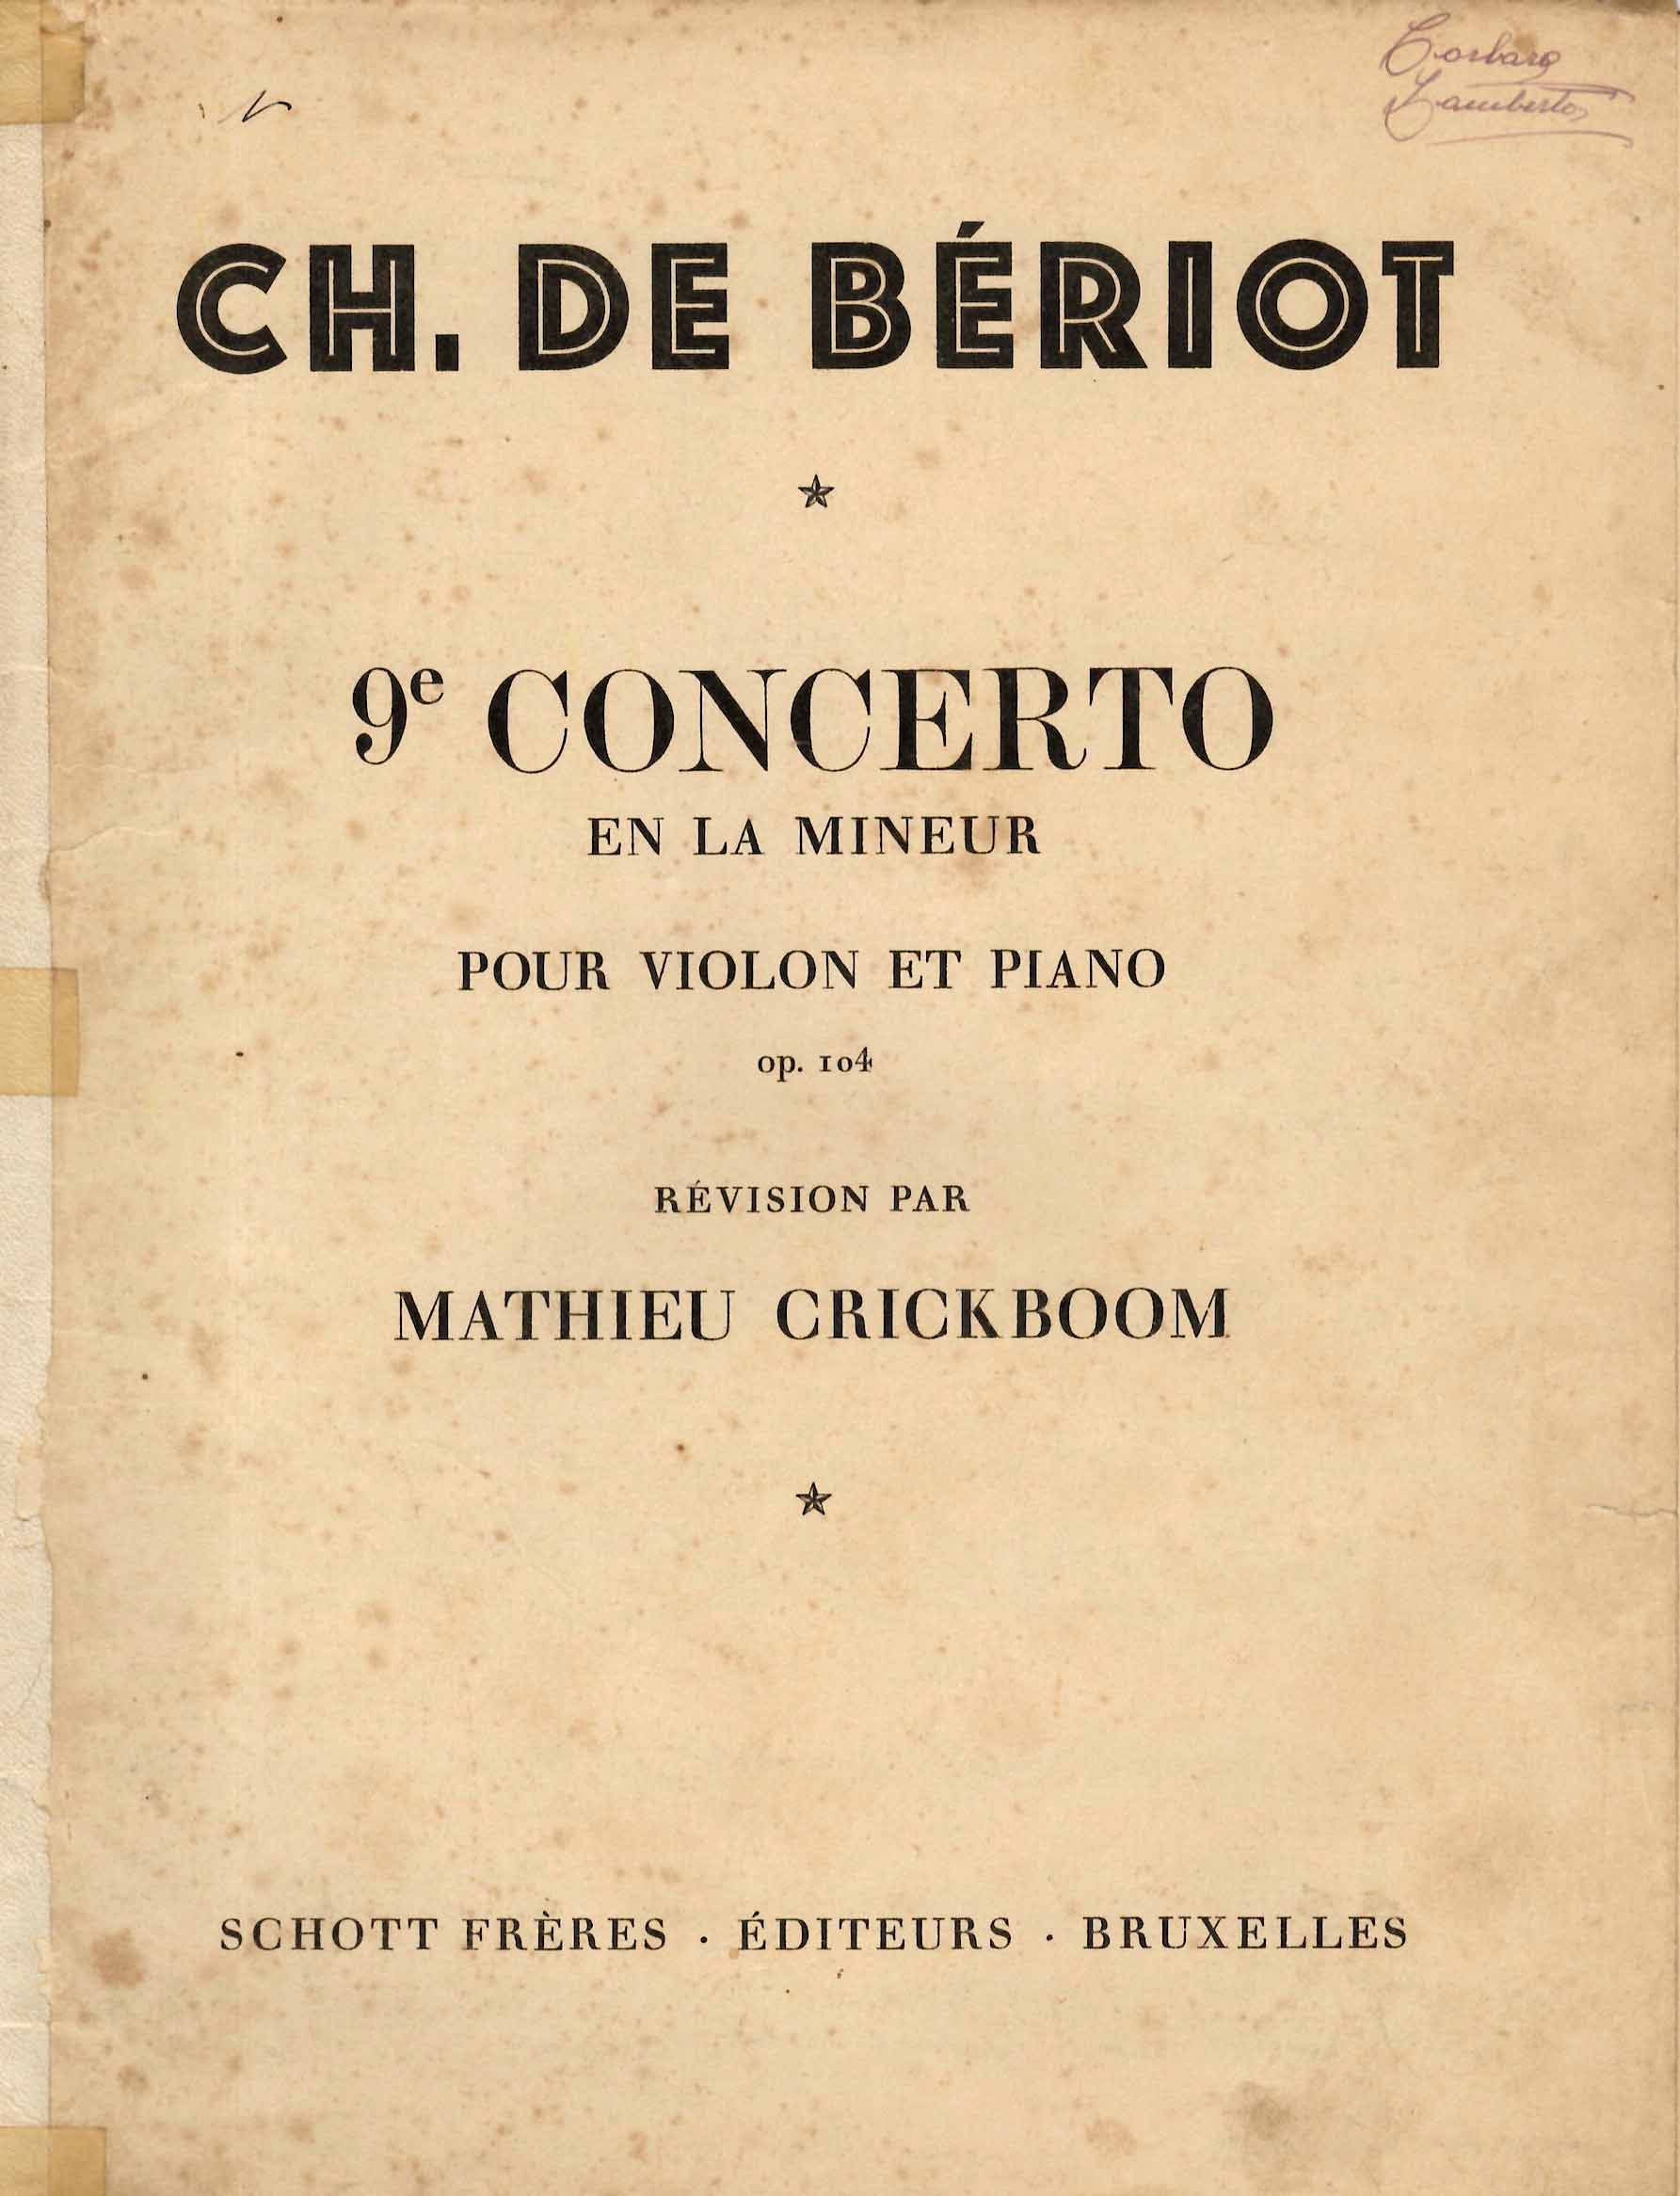 9me Concerto en la mineur, op. 104